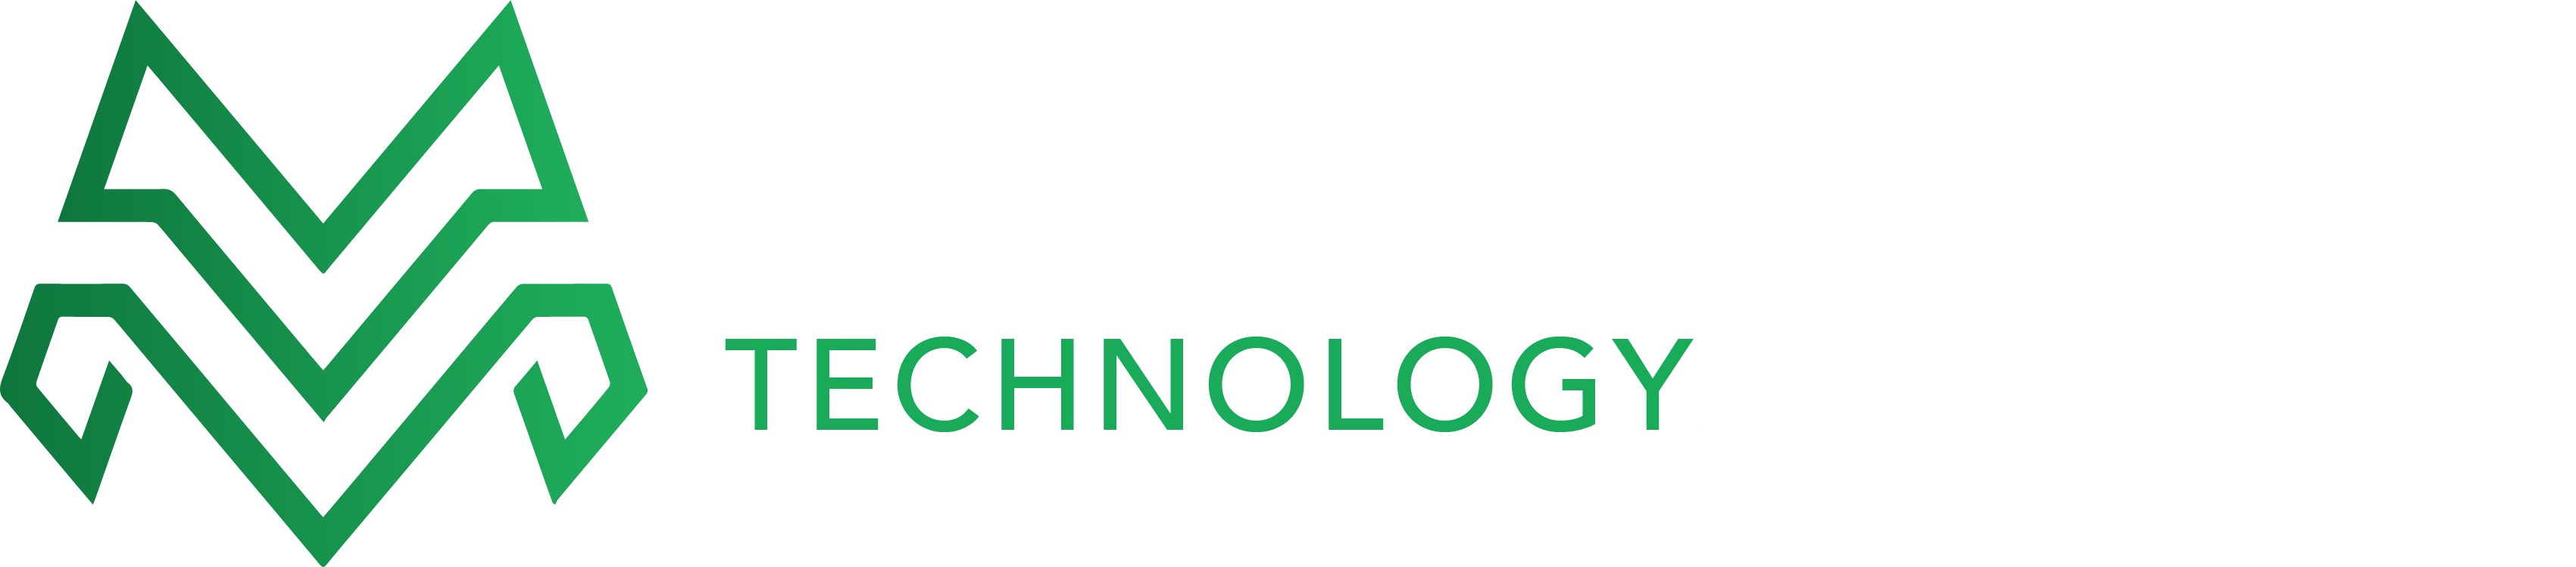 Magnesium Technology Group